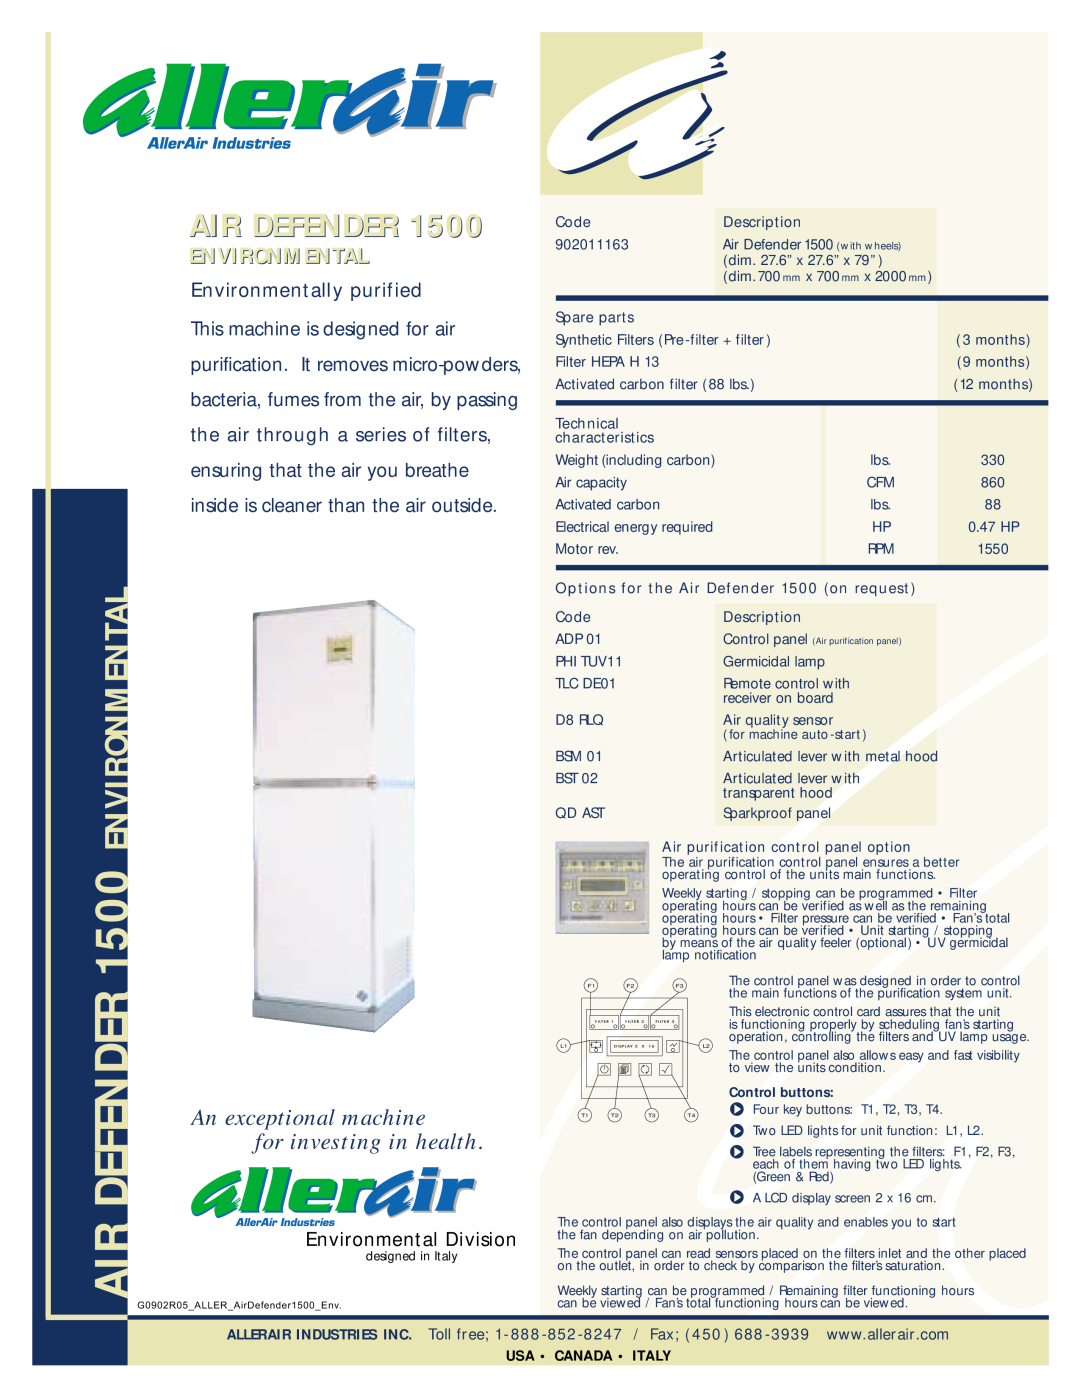 AllerAir AIR DEFENDER 1500 ENVIRONMENTAL, Air Defender, Environmental, An exceptional machine for investing in health 